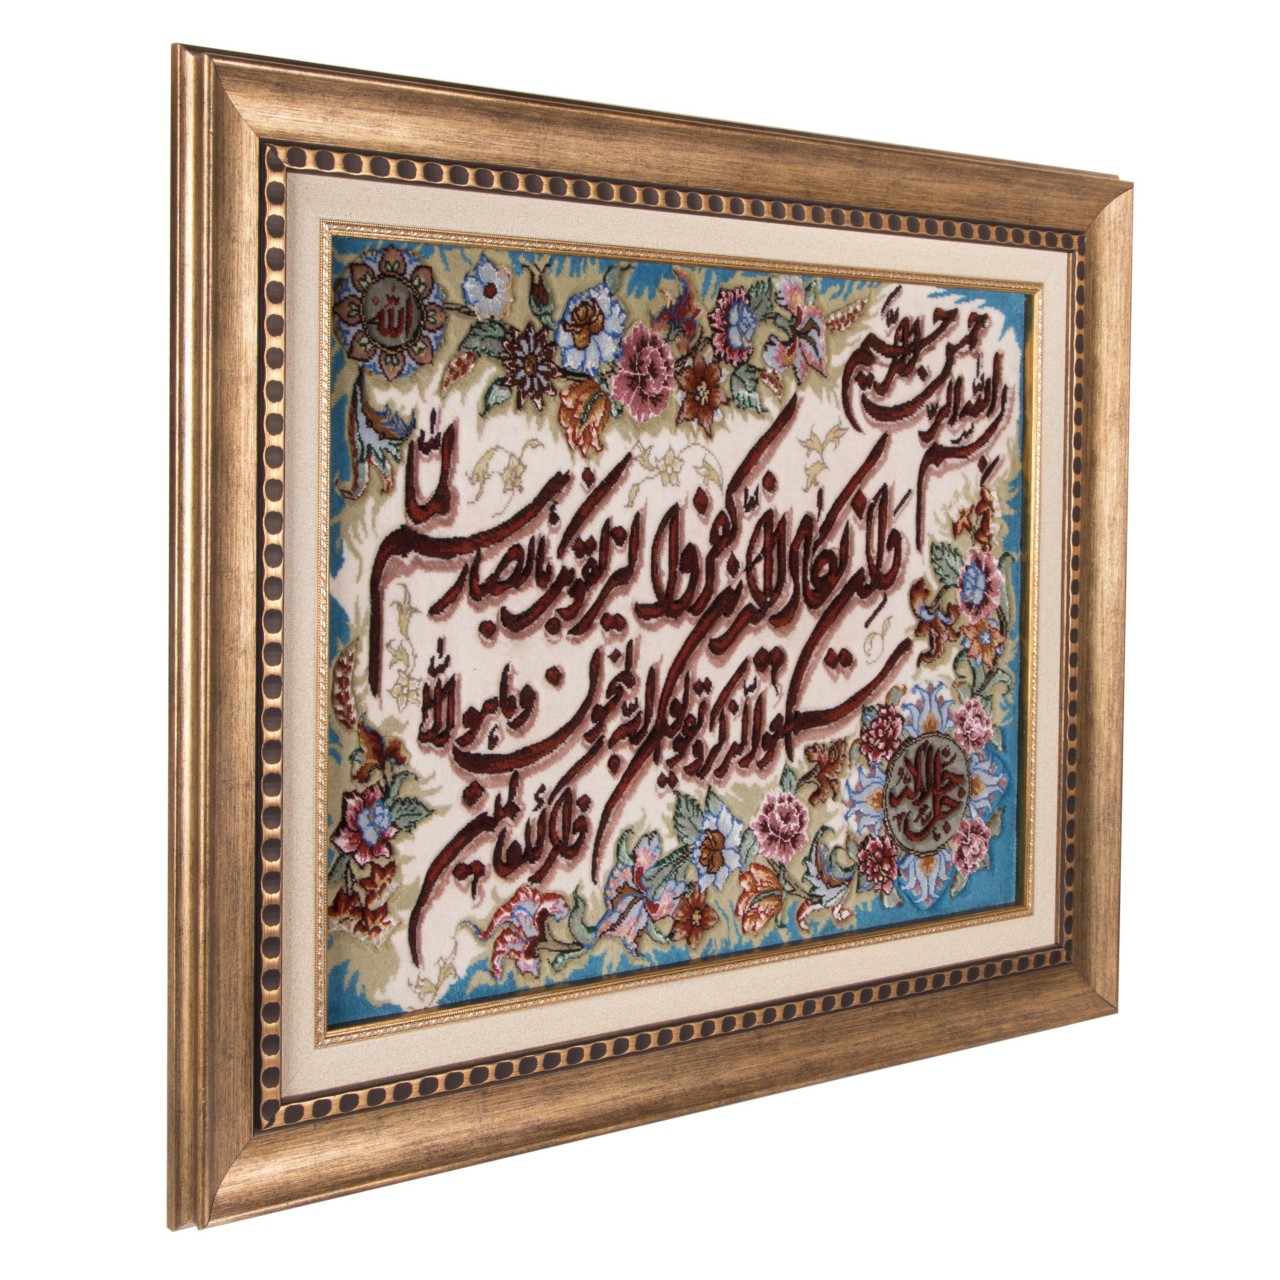 Pictorial Tabriz Carpet Ref: 901534